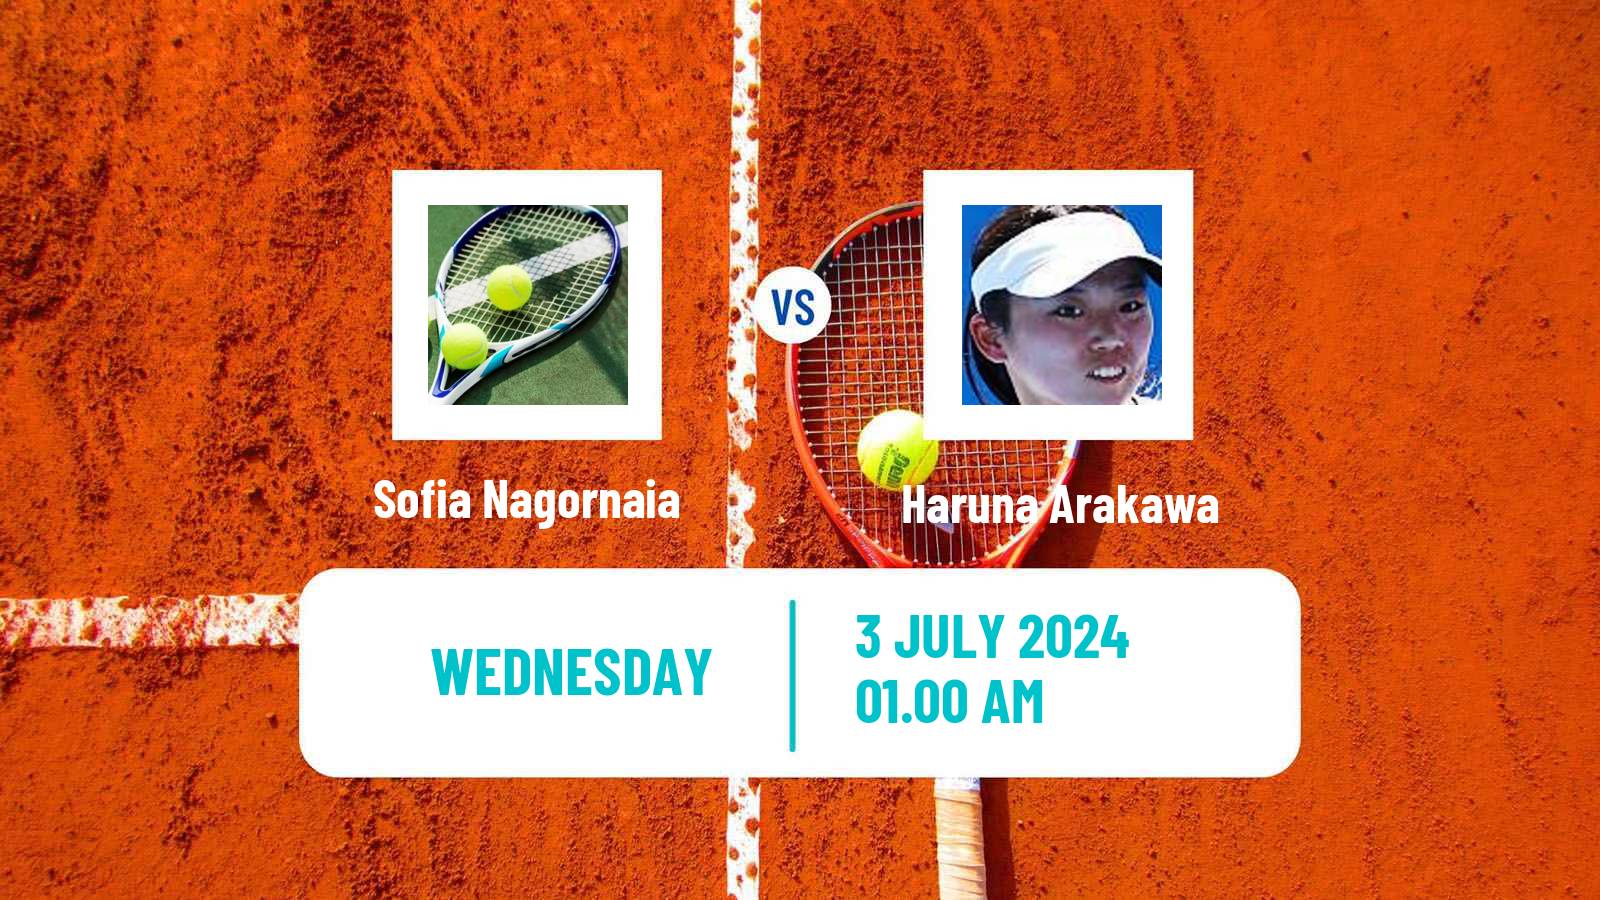 Tennis ITF W35 Nakhon Si Thammarat 2 Women Sofia Nagornaia - Haruna Arakawa